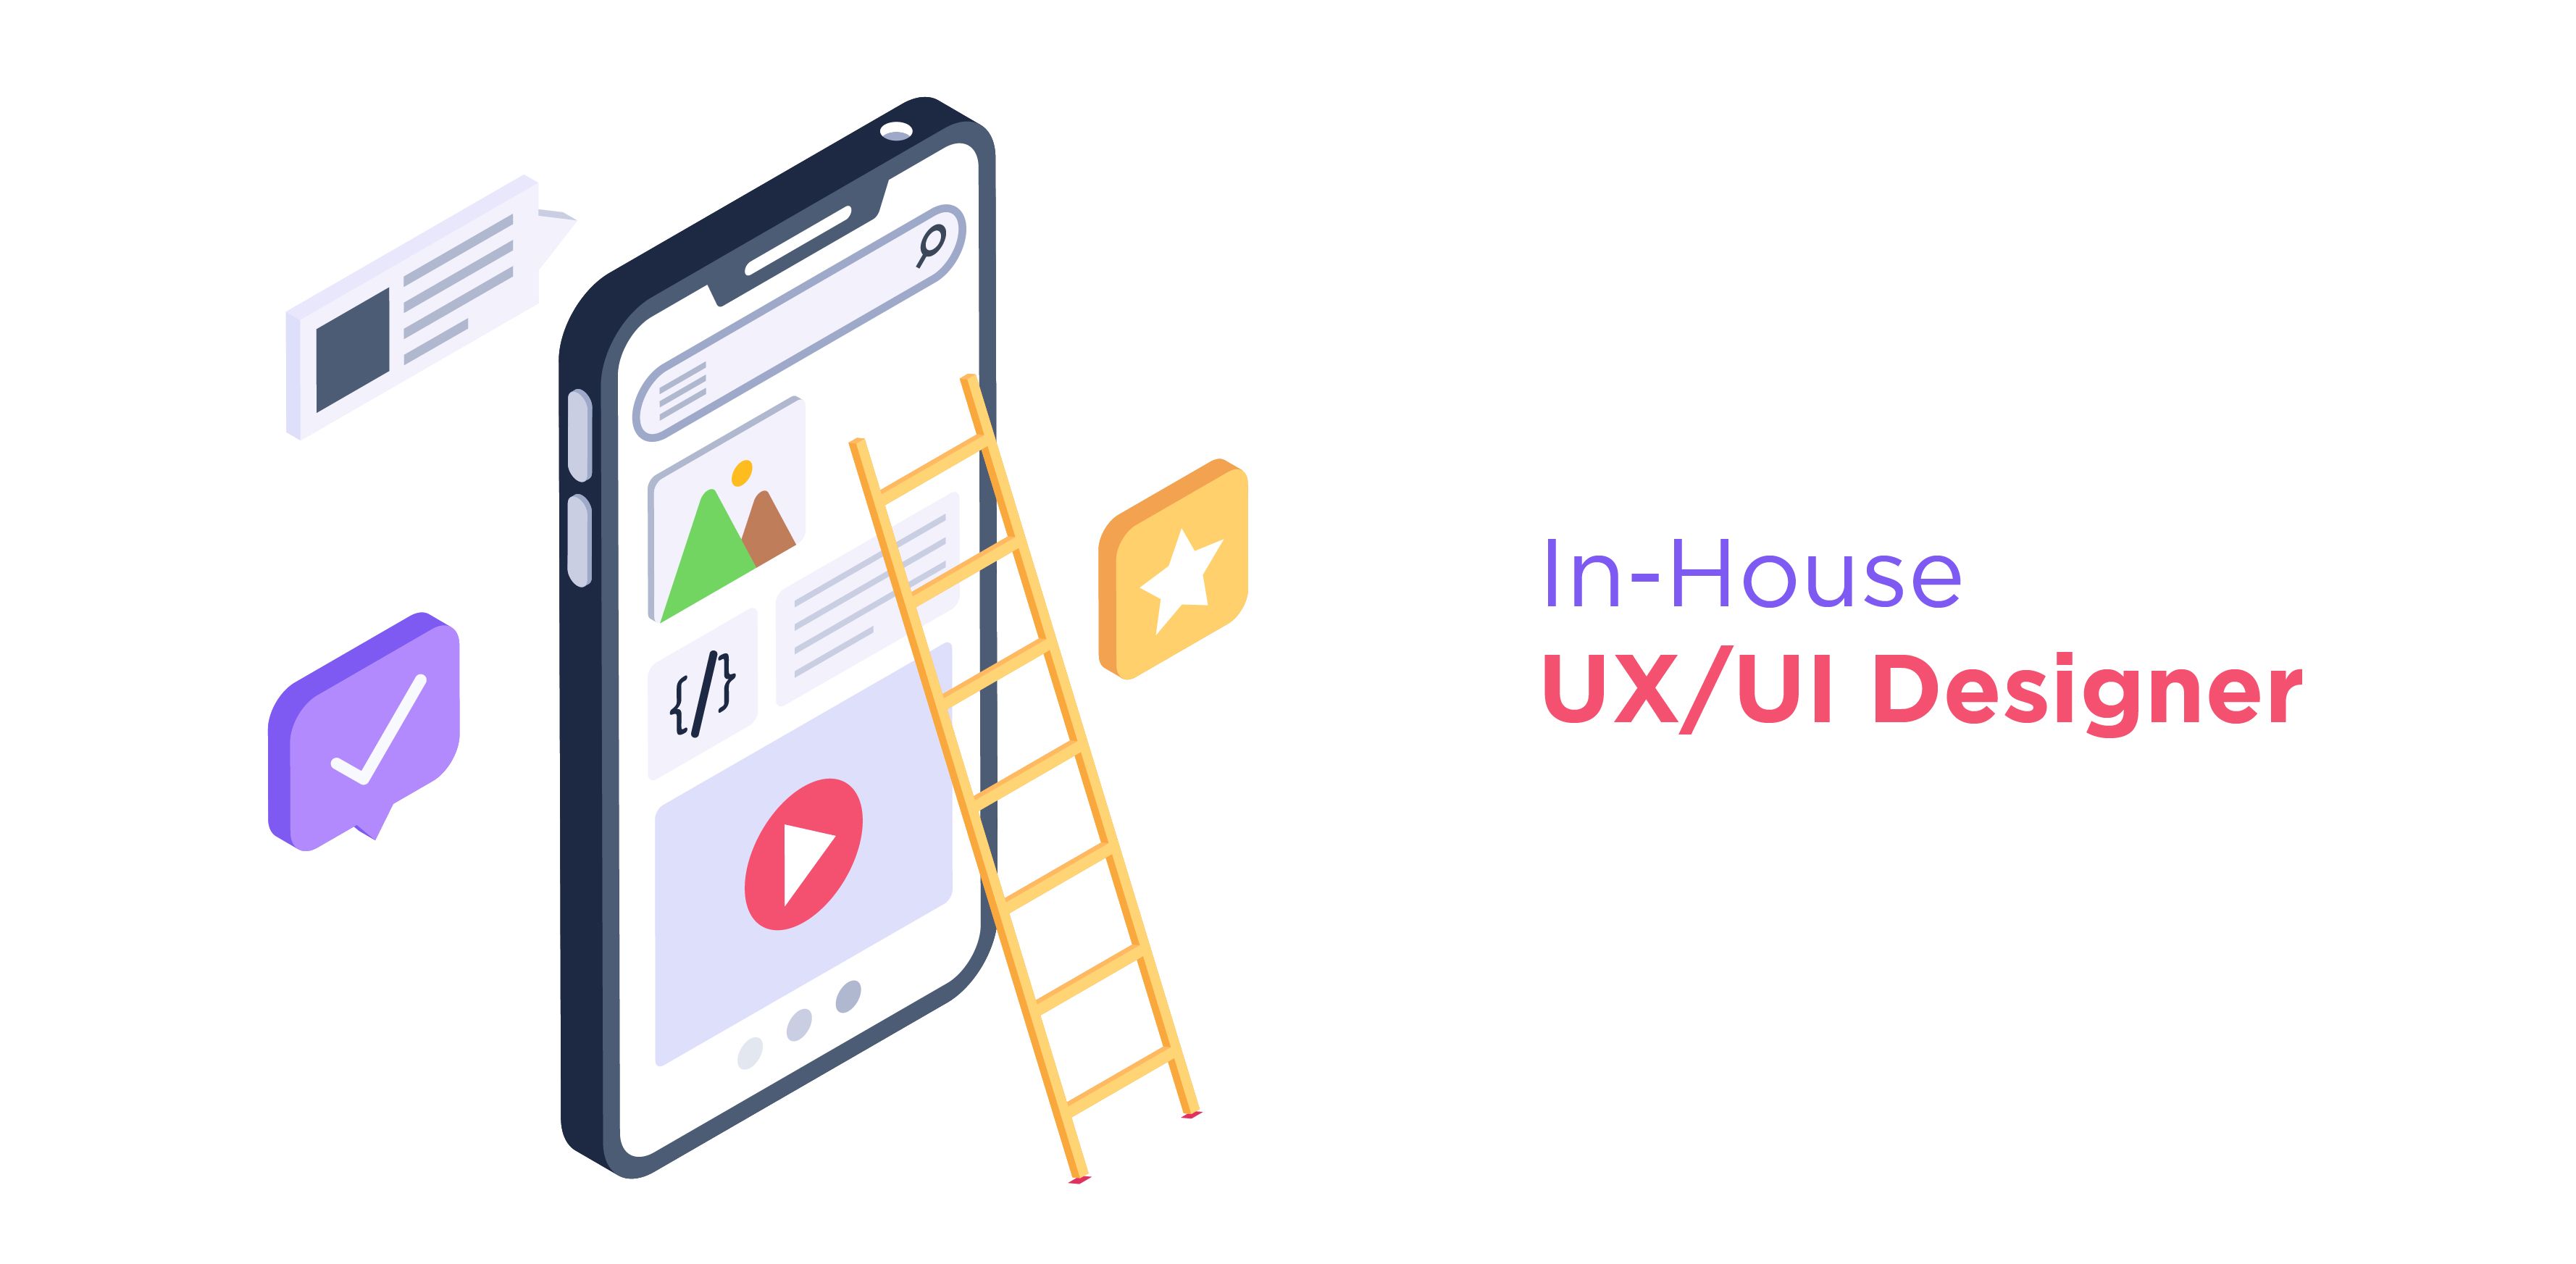 Hiring UI/UX Designer 2: Hire an in-house UX/UI designer